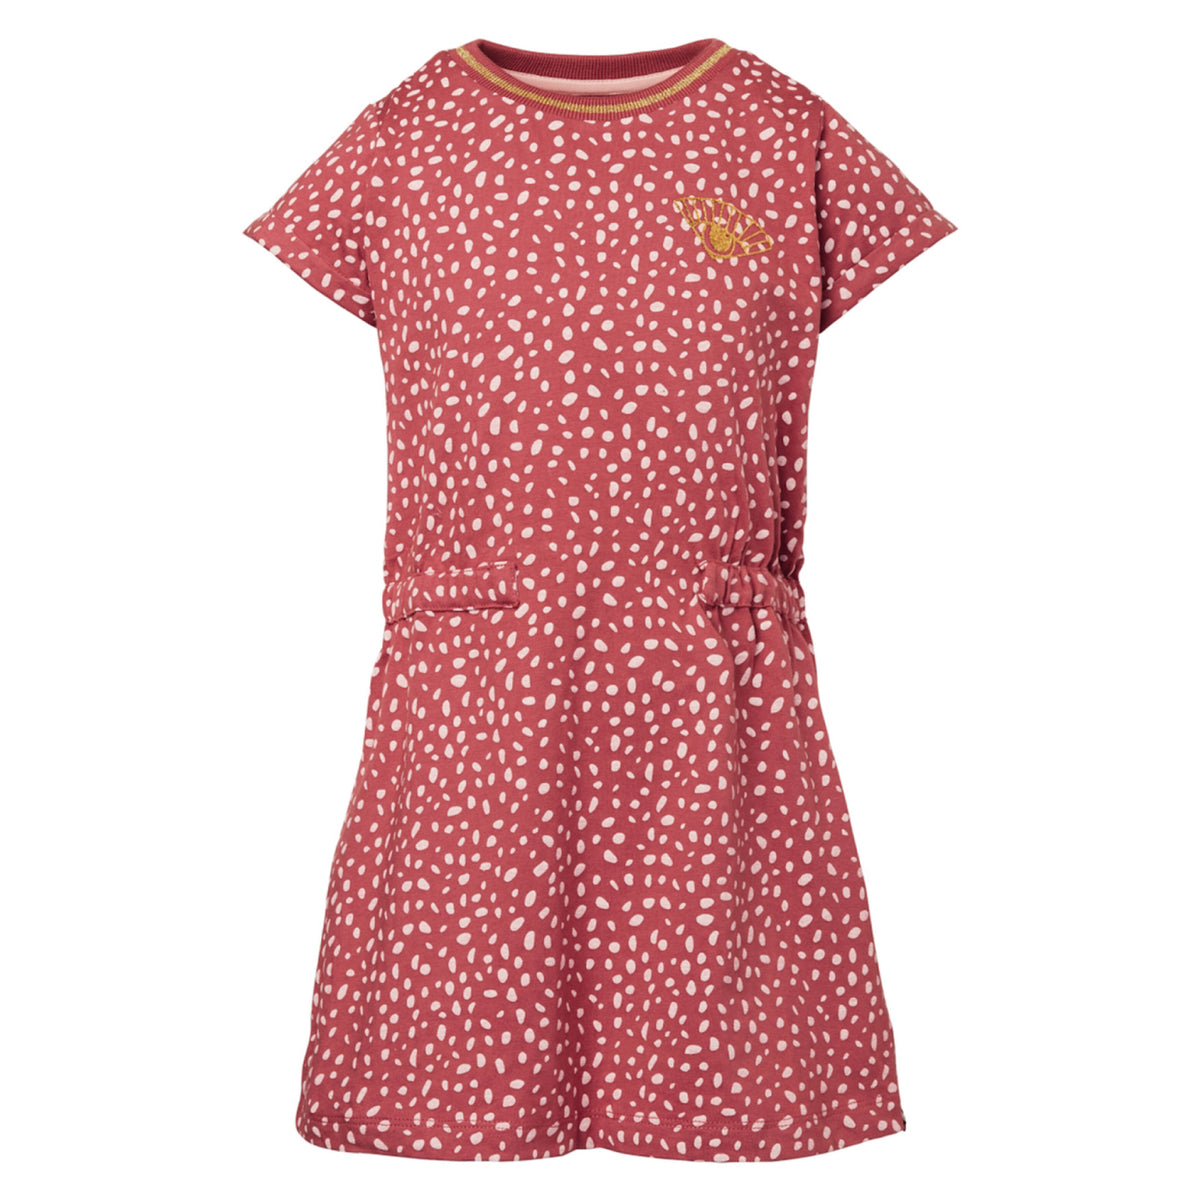 Tee Shirt Dress with Paint Dot Print